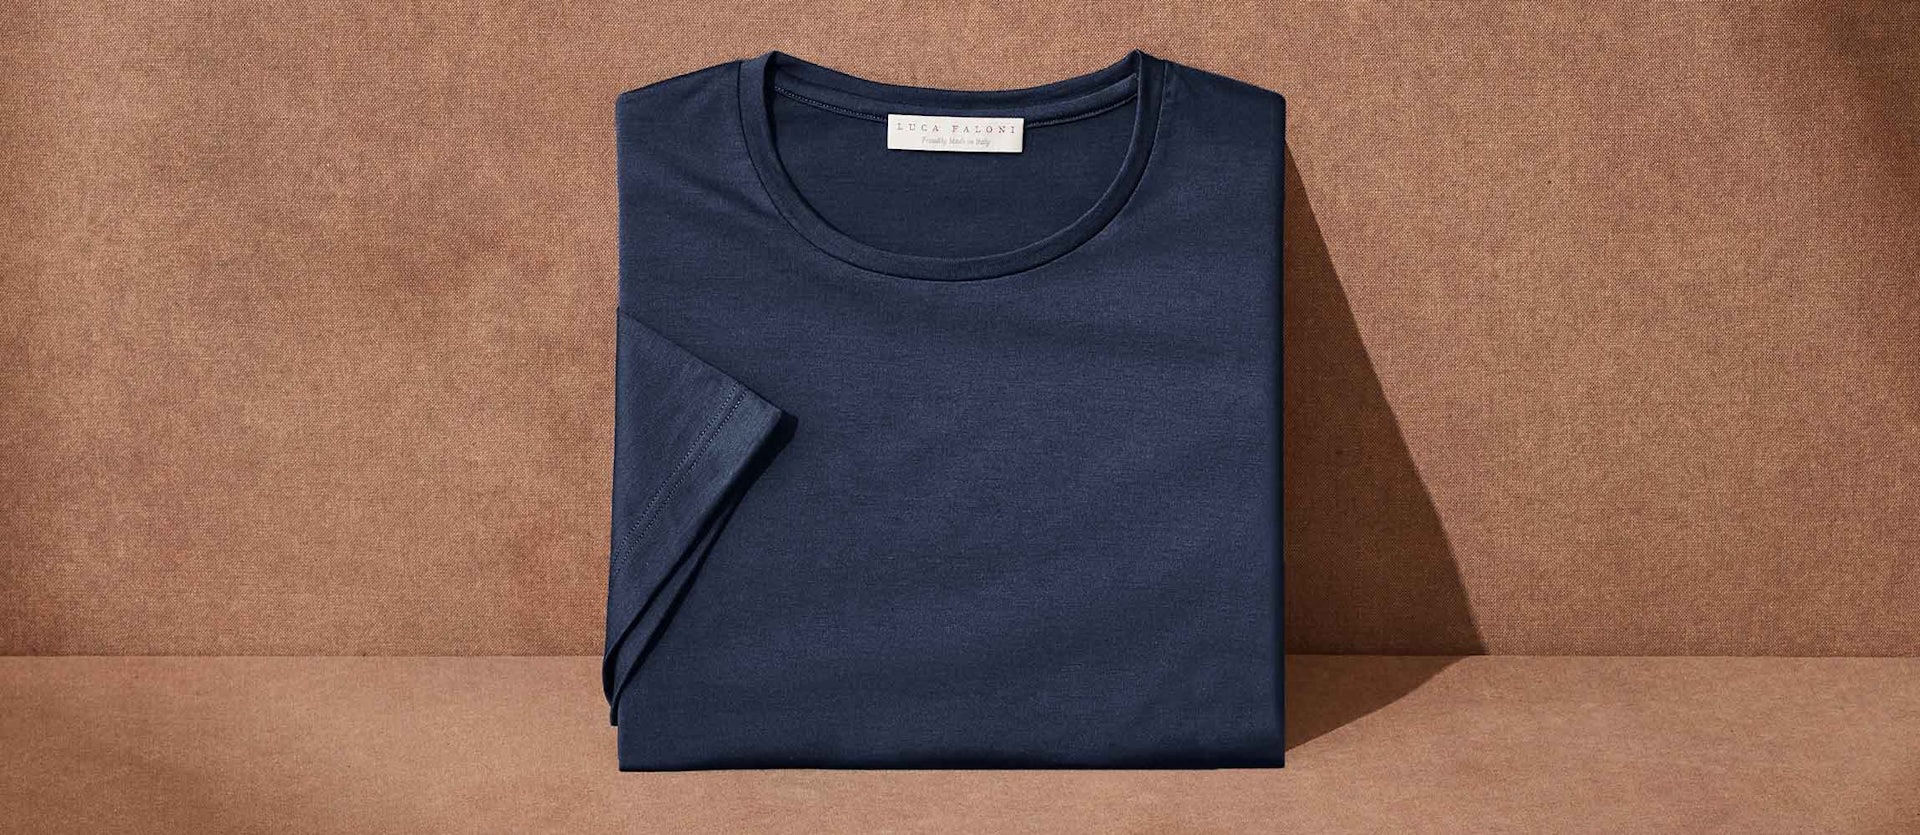 Luca Faloni Midnight Blue Silk Cotton T-Shirt